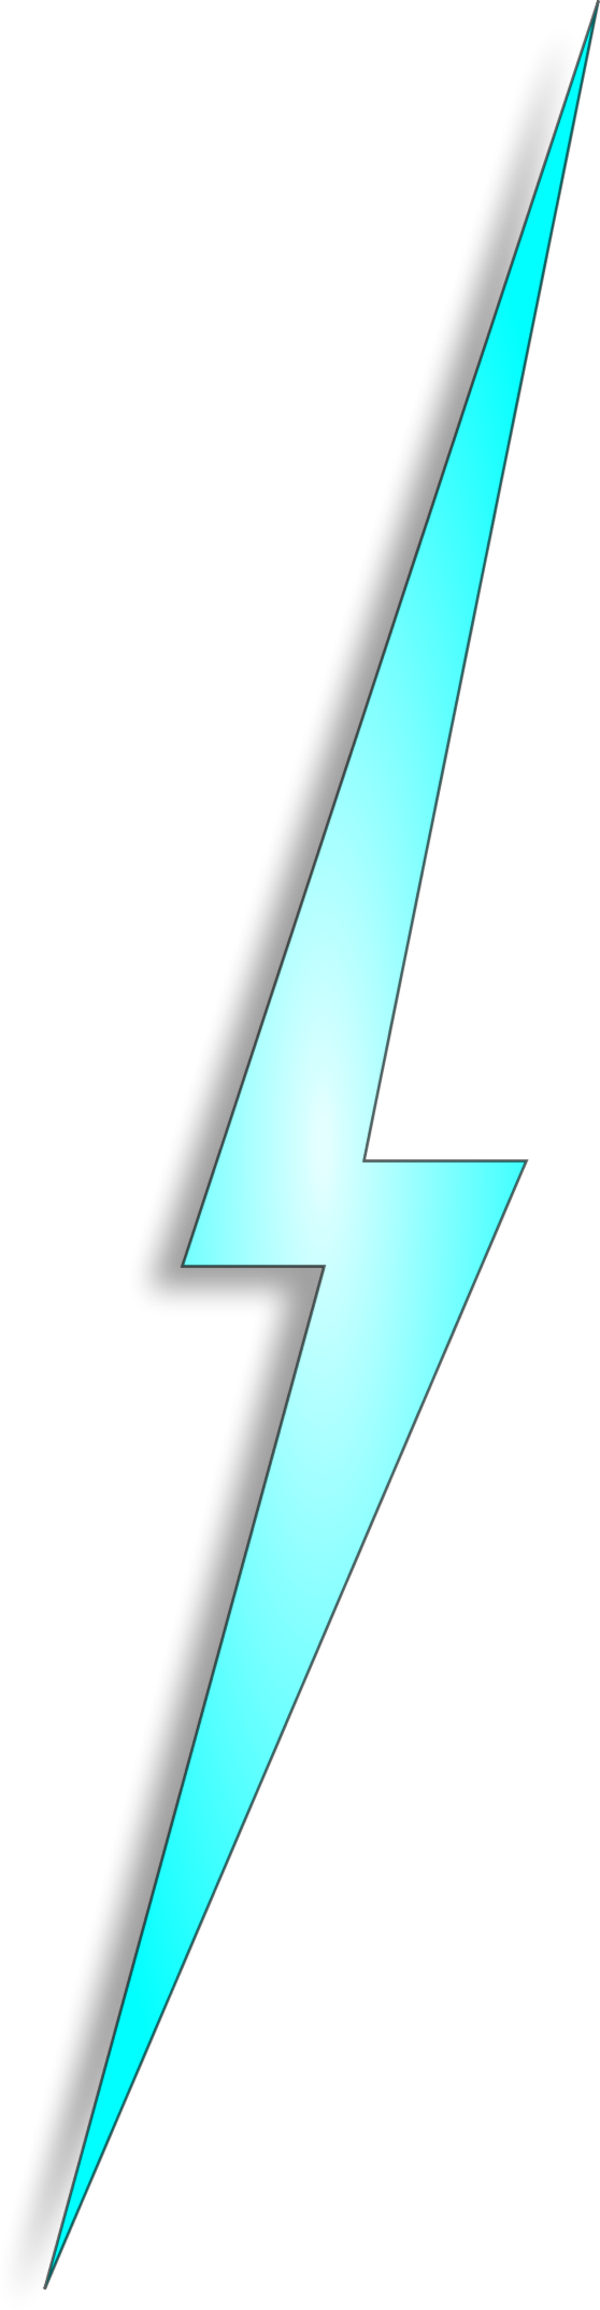 Lightning bolt yellow lightning electricity bolt thunder vector clip art 2